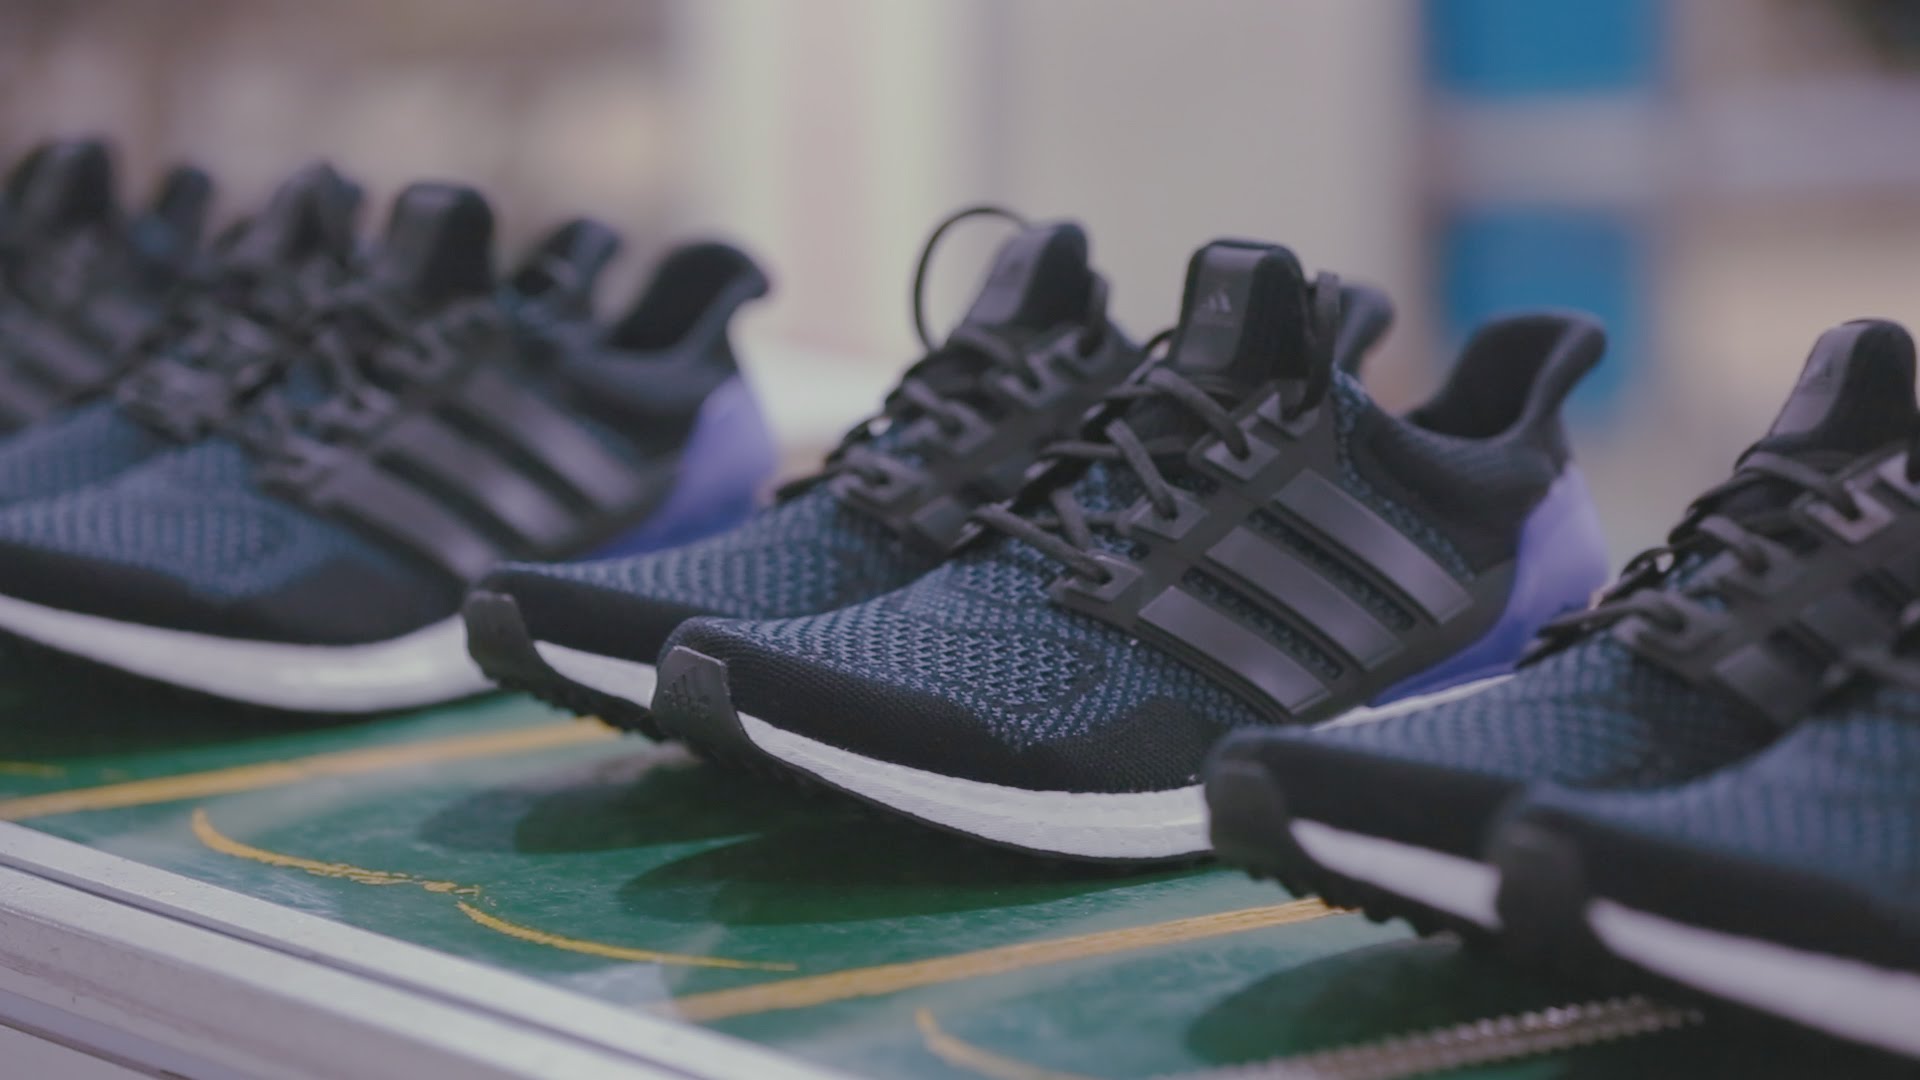 Process: The Adidas Ultra Boost AKA “The World’s Best Running Shoe”